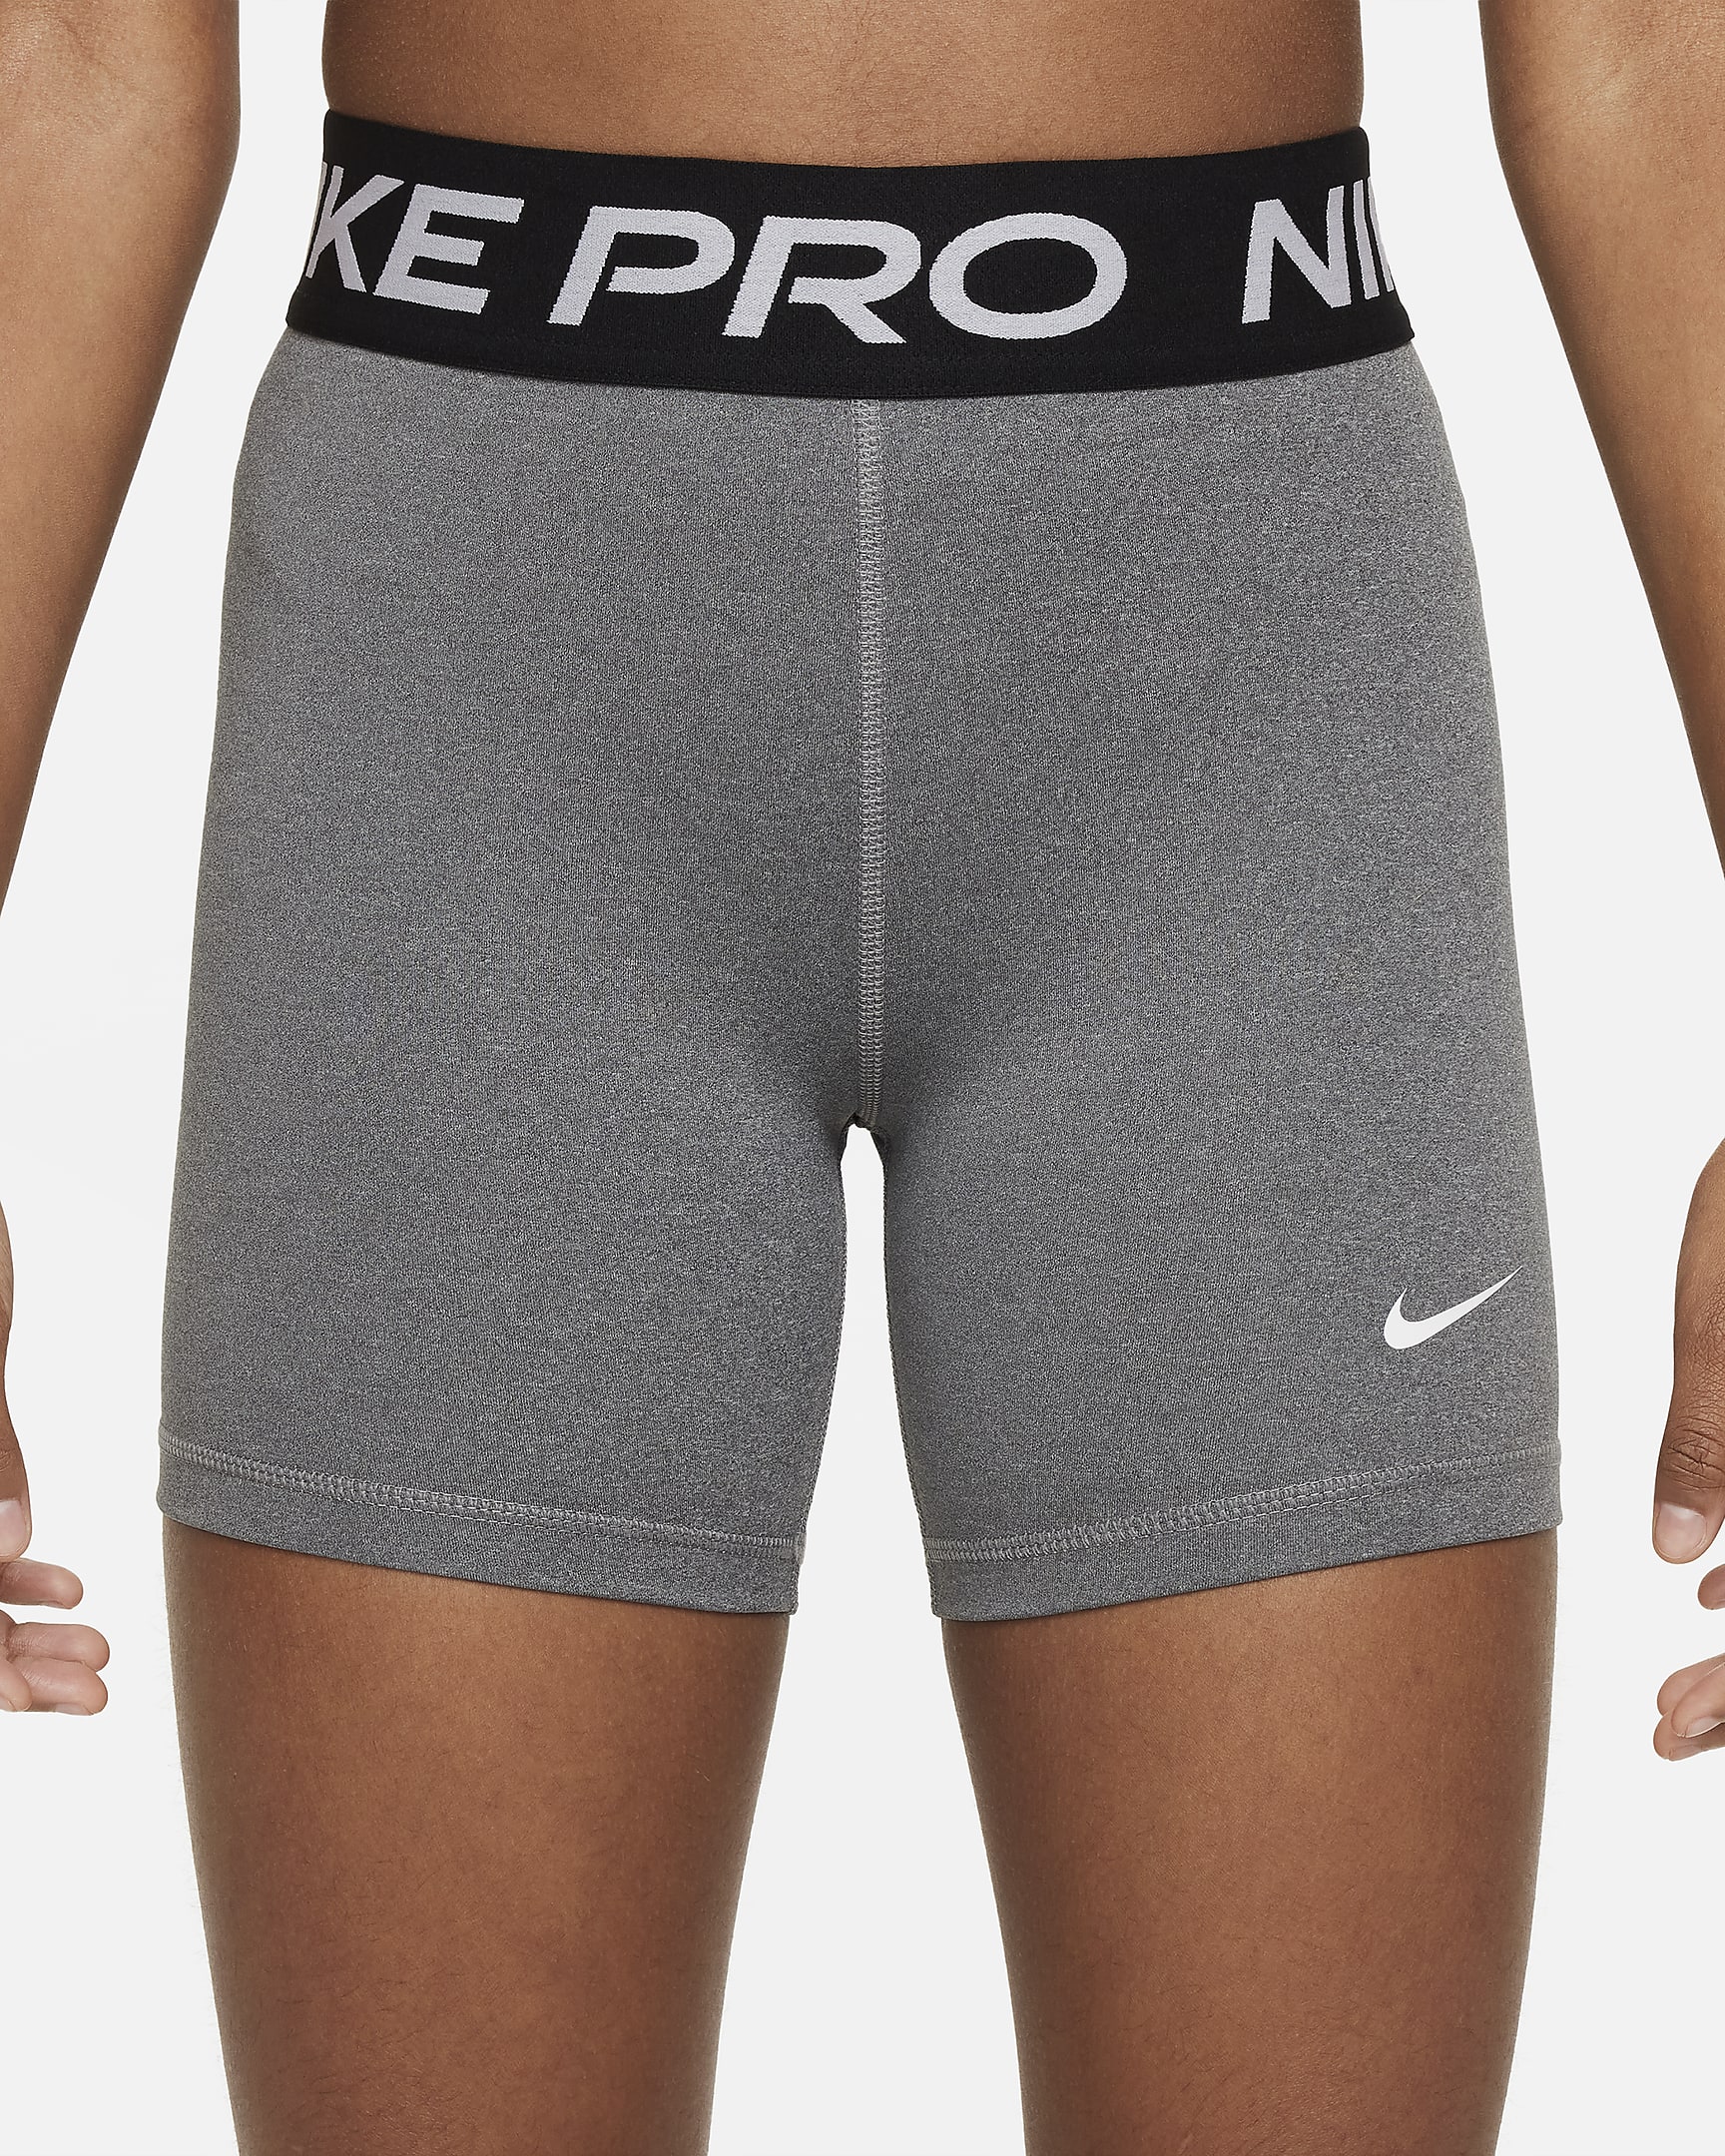 Nike Pro Older Kids' (Girls') Shorts - Carbon Heather/White